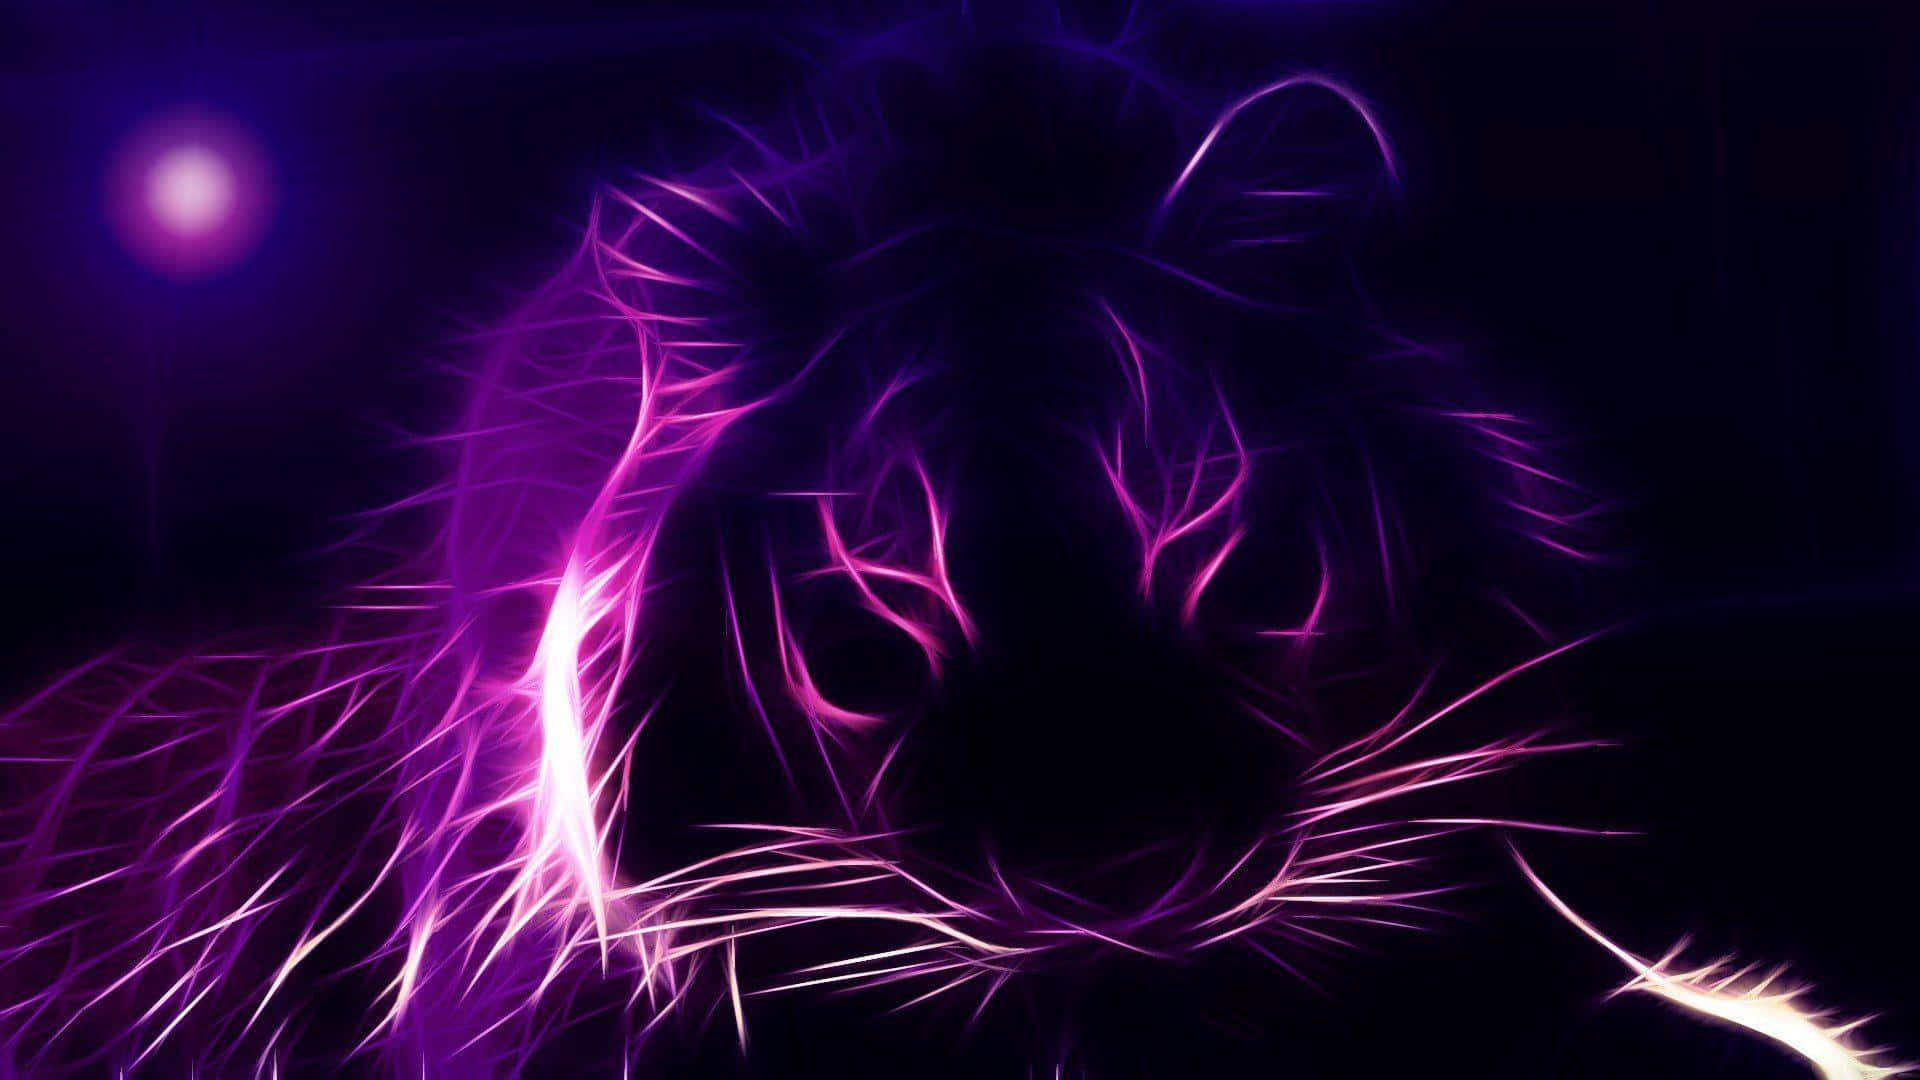 Experience the vibrancy of neon purple